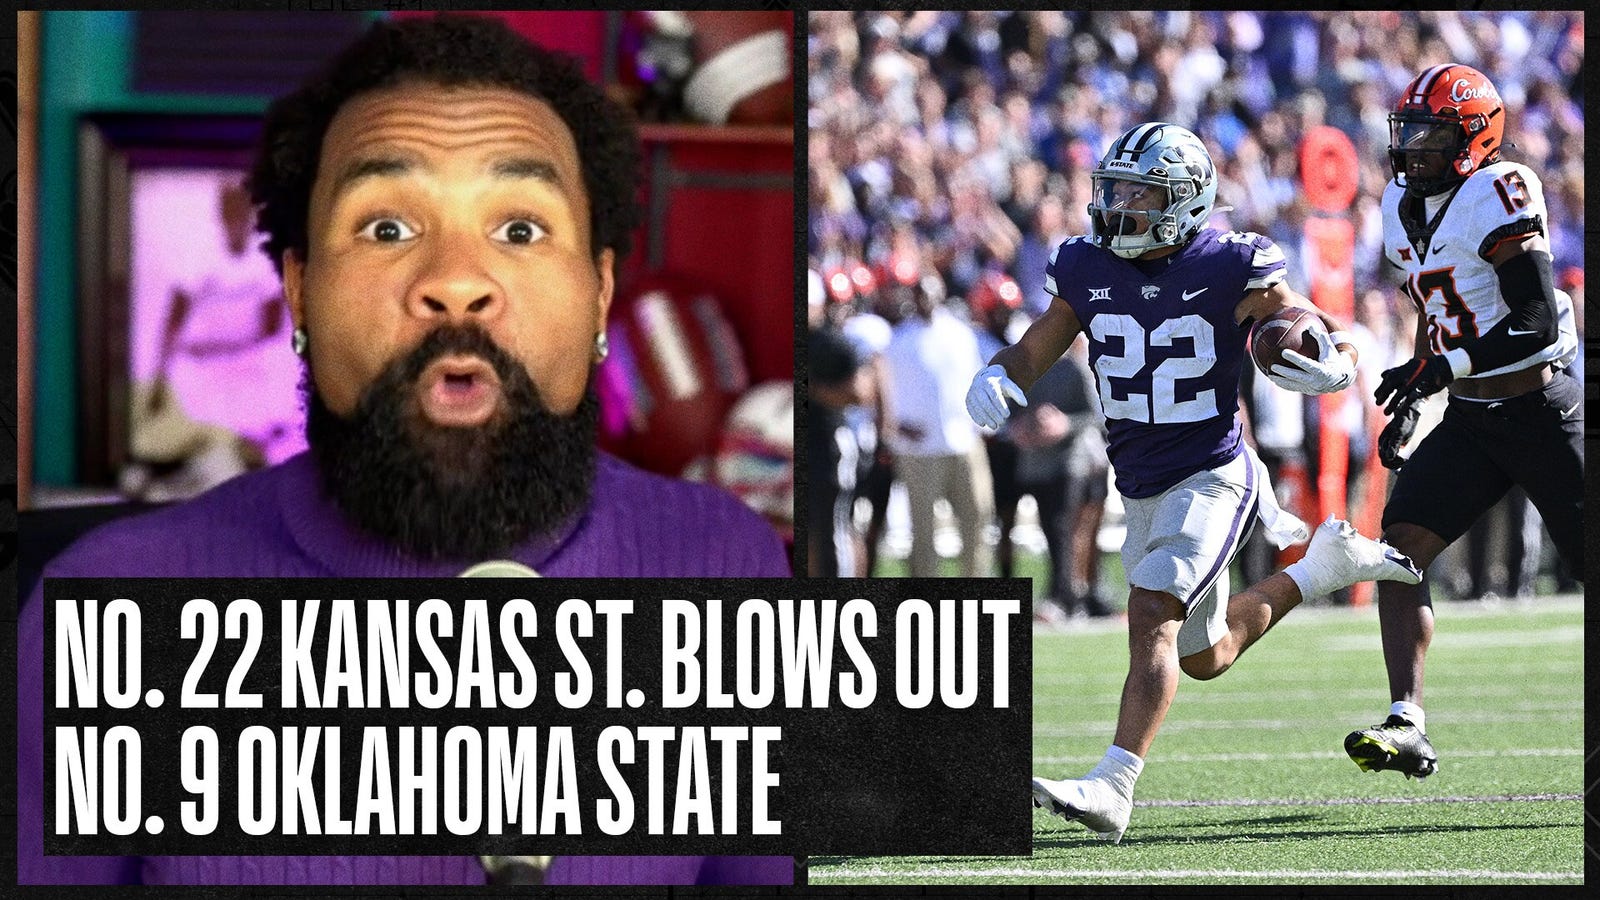 Kansas State blows out Oklahoma State